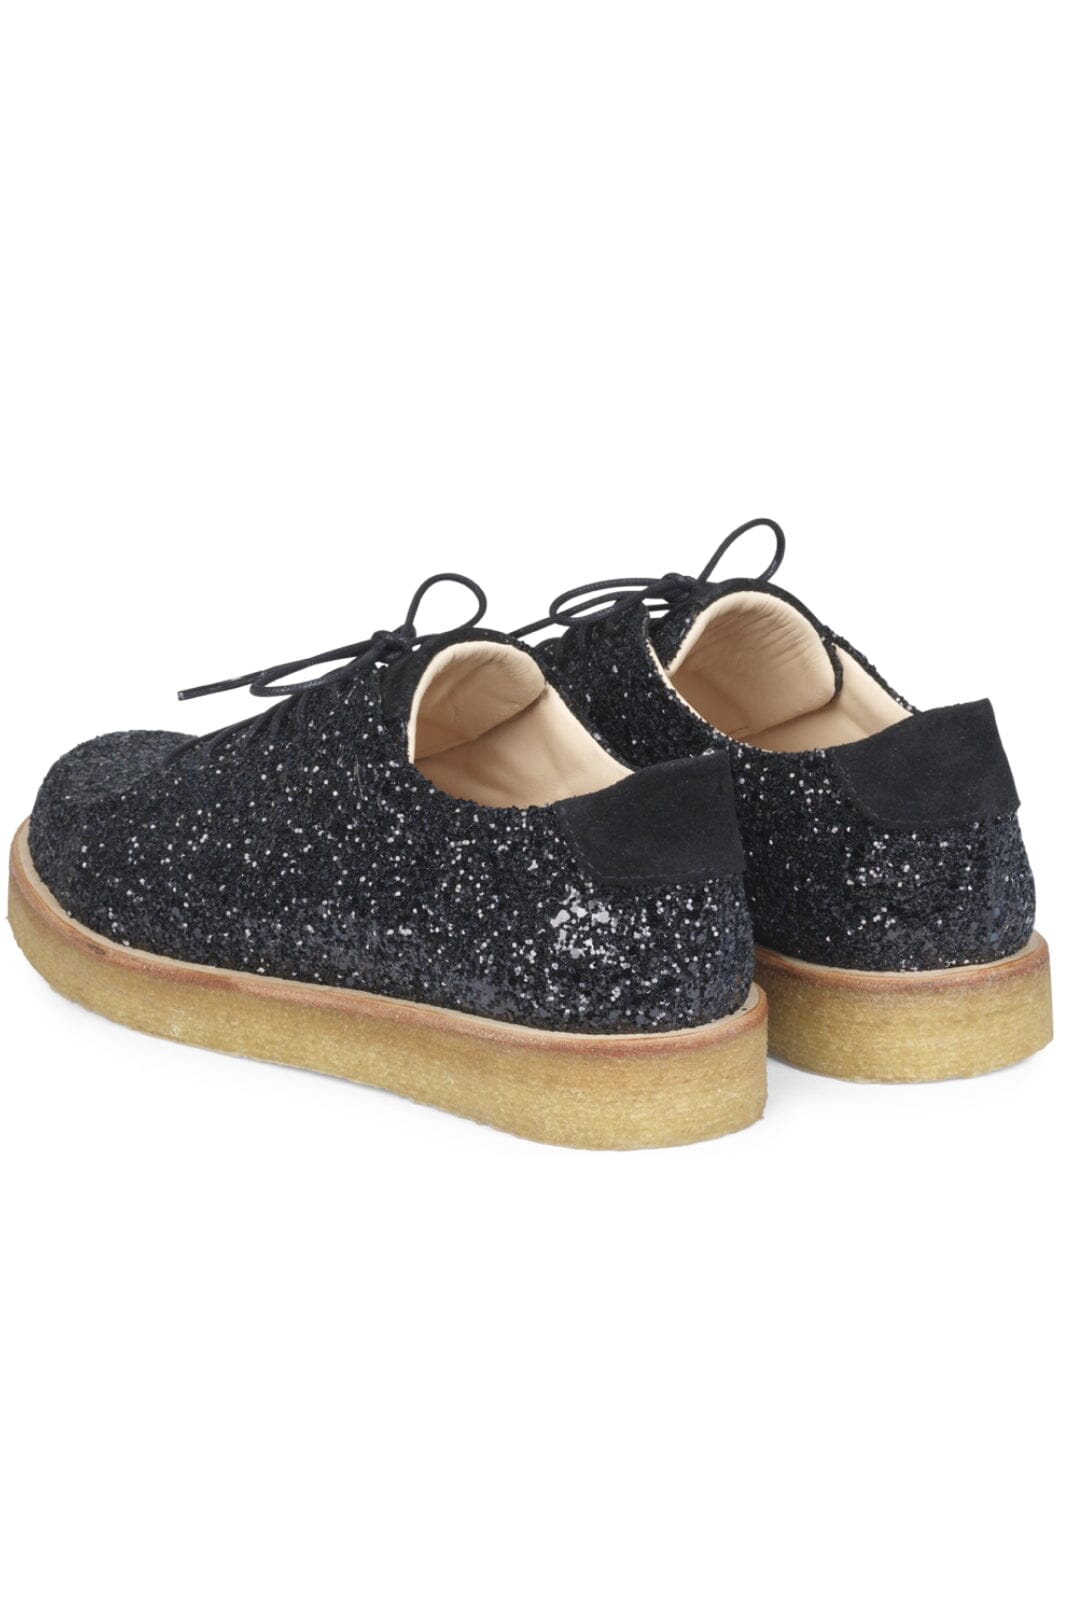 Angulus - Sneaker in with plateau sole - 2486/1163 Black Glitt